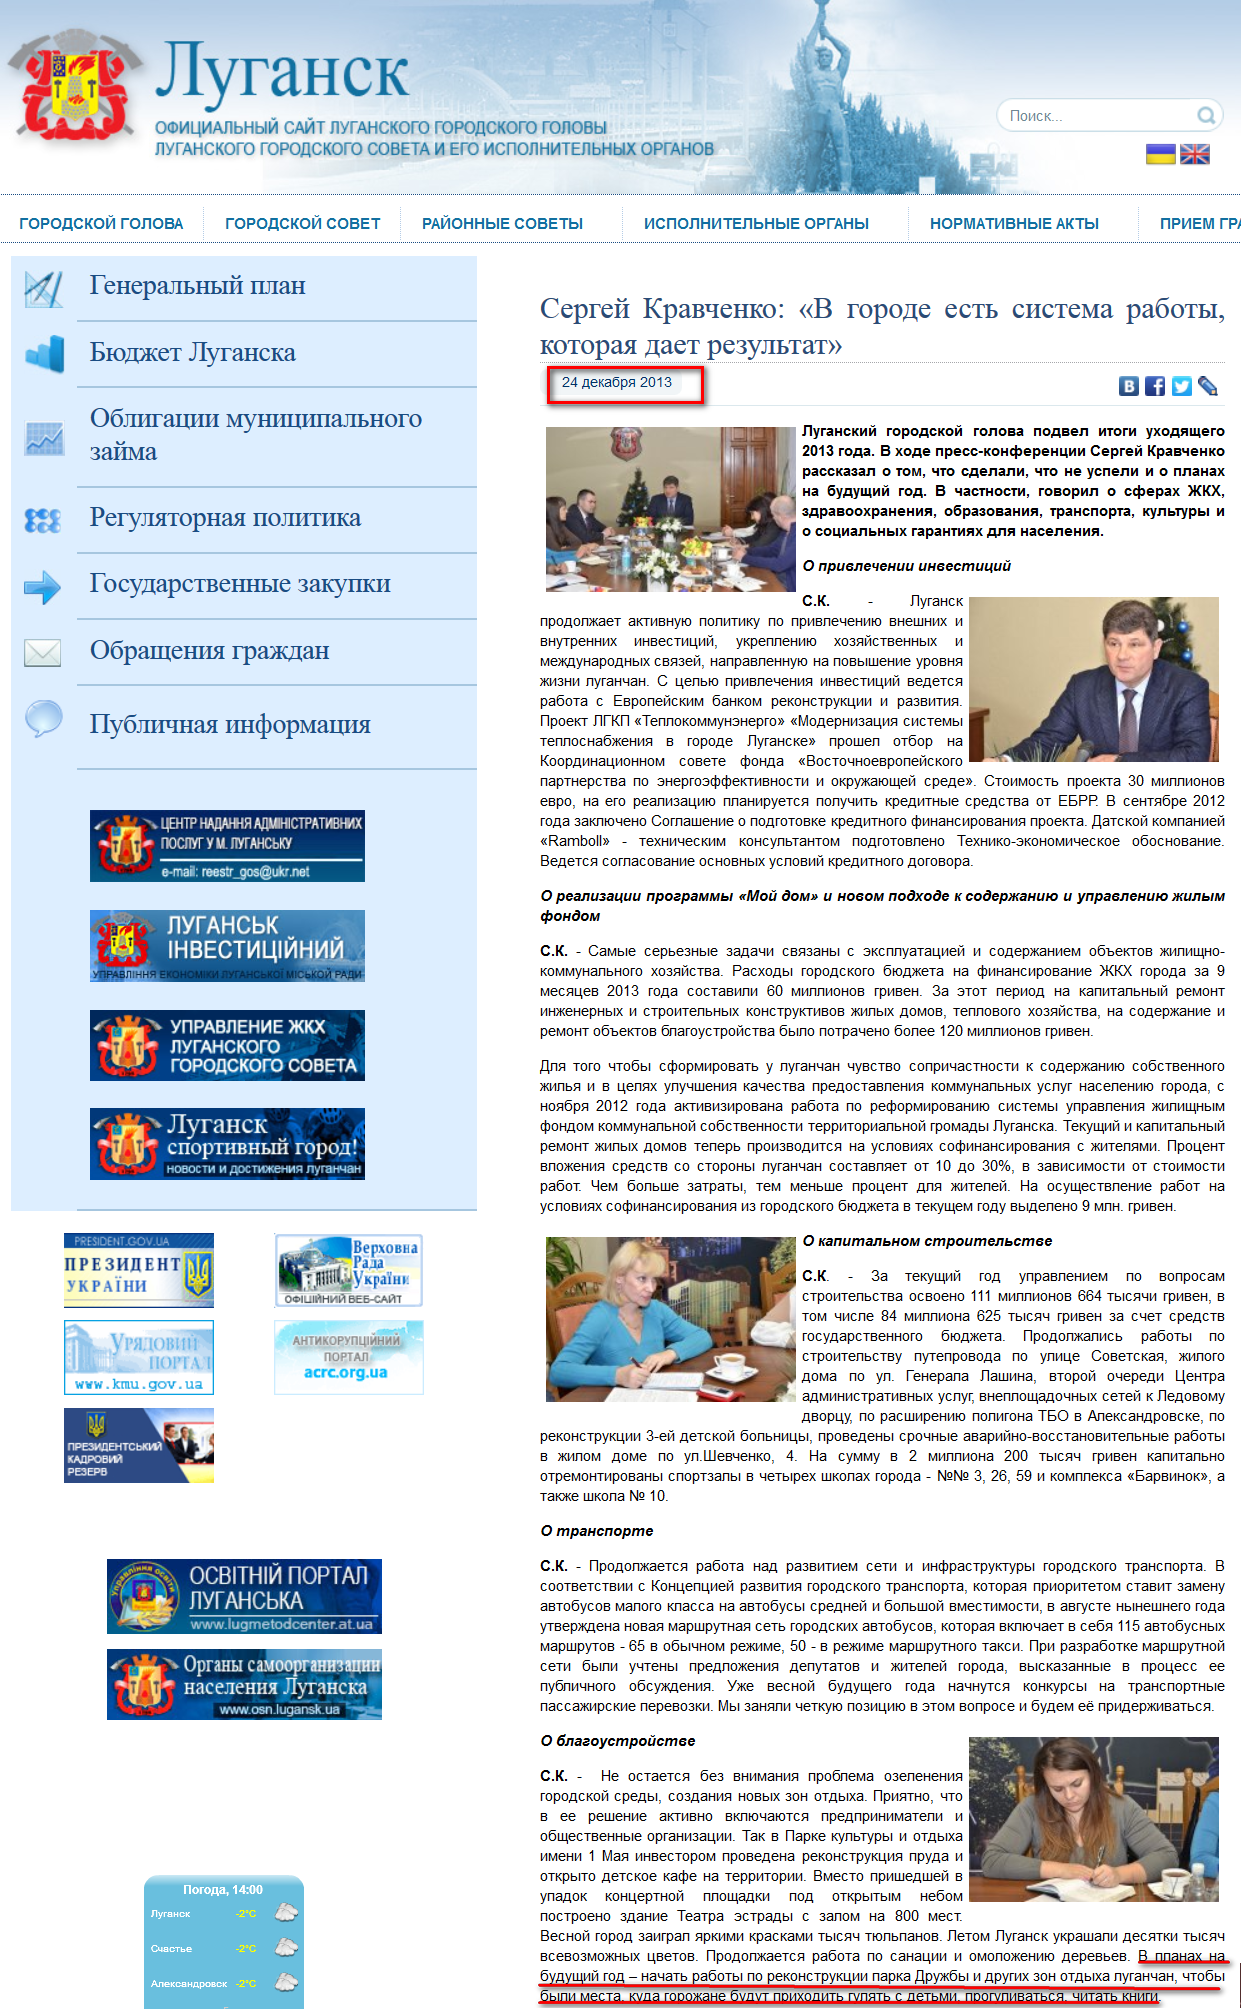 http://gorod.lugansk.ua/index.php?newsid=20588